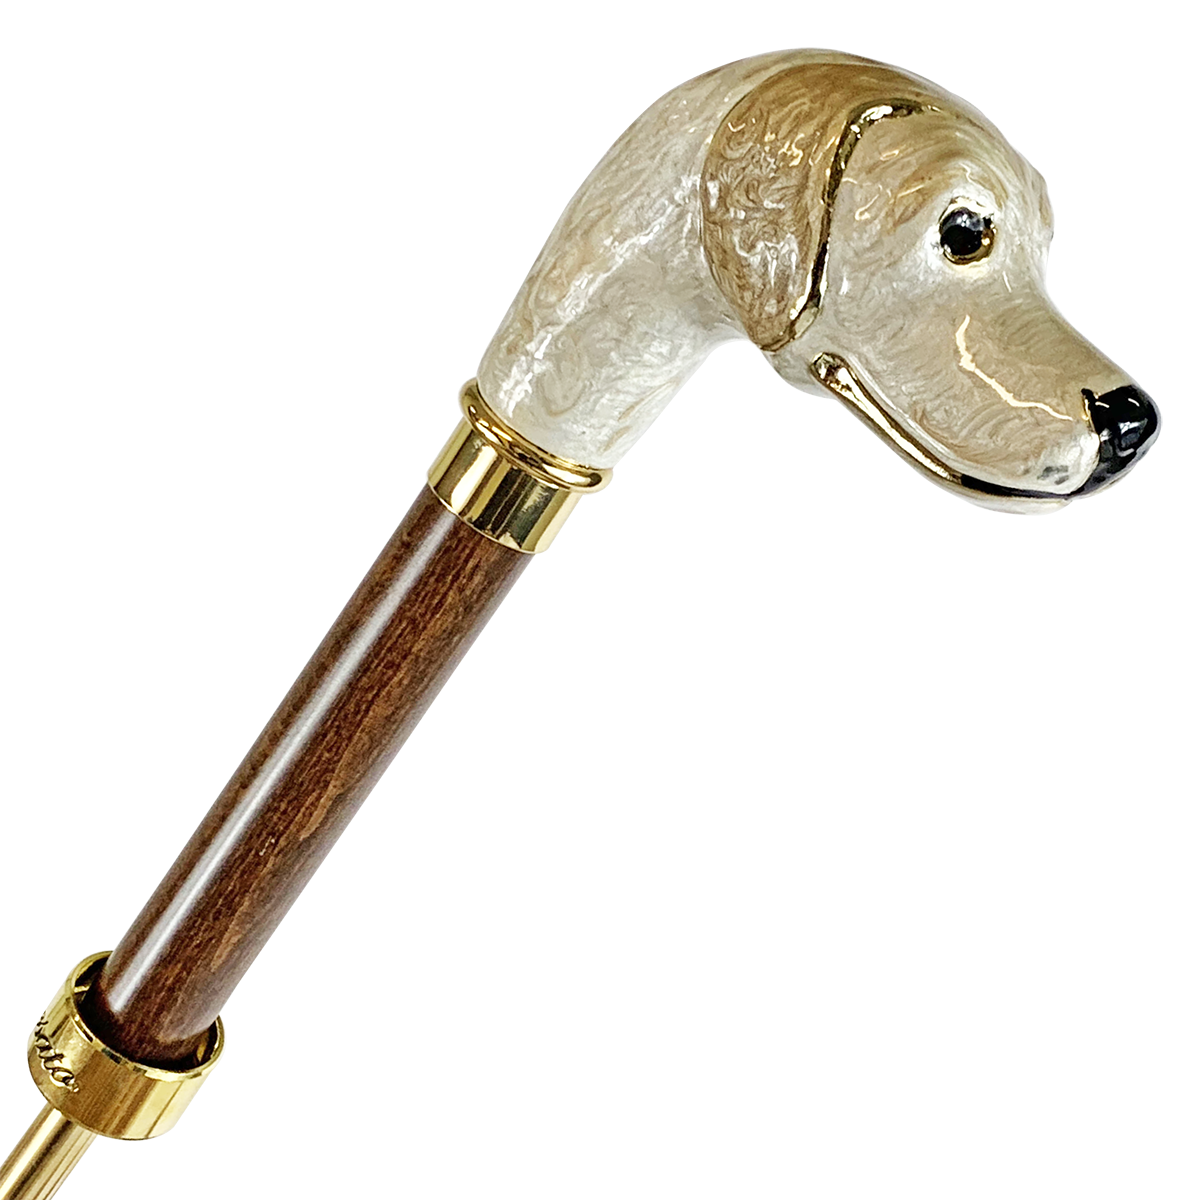 Elegant umbrella in animalier style and hand-enamelled Dog